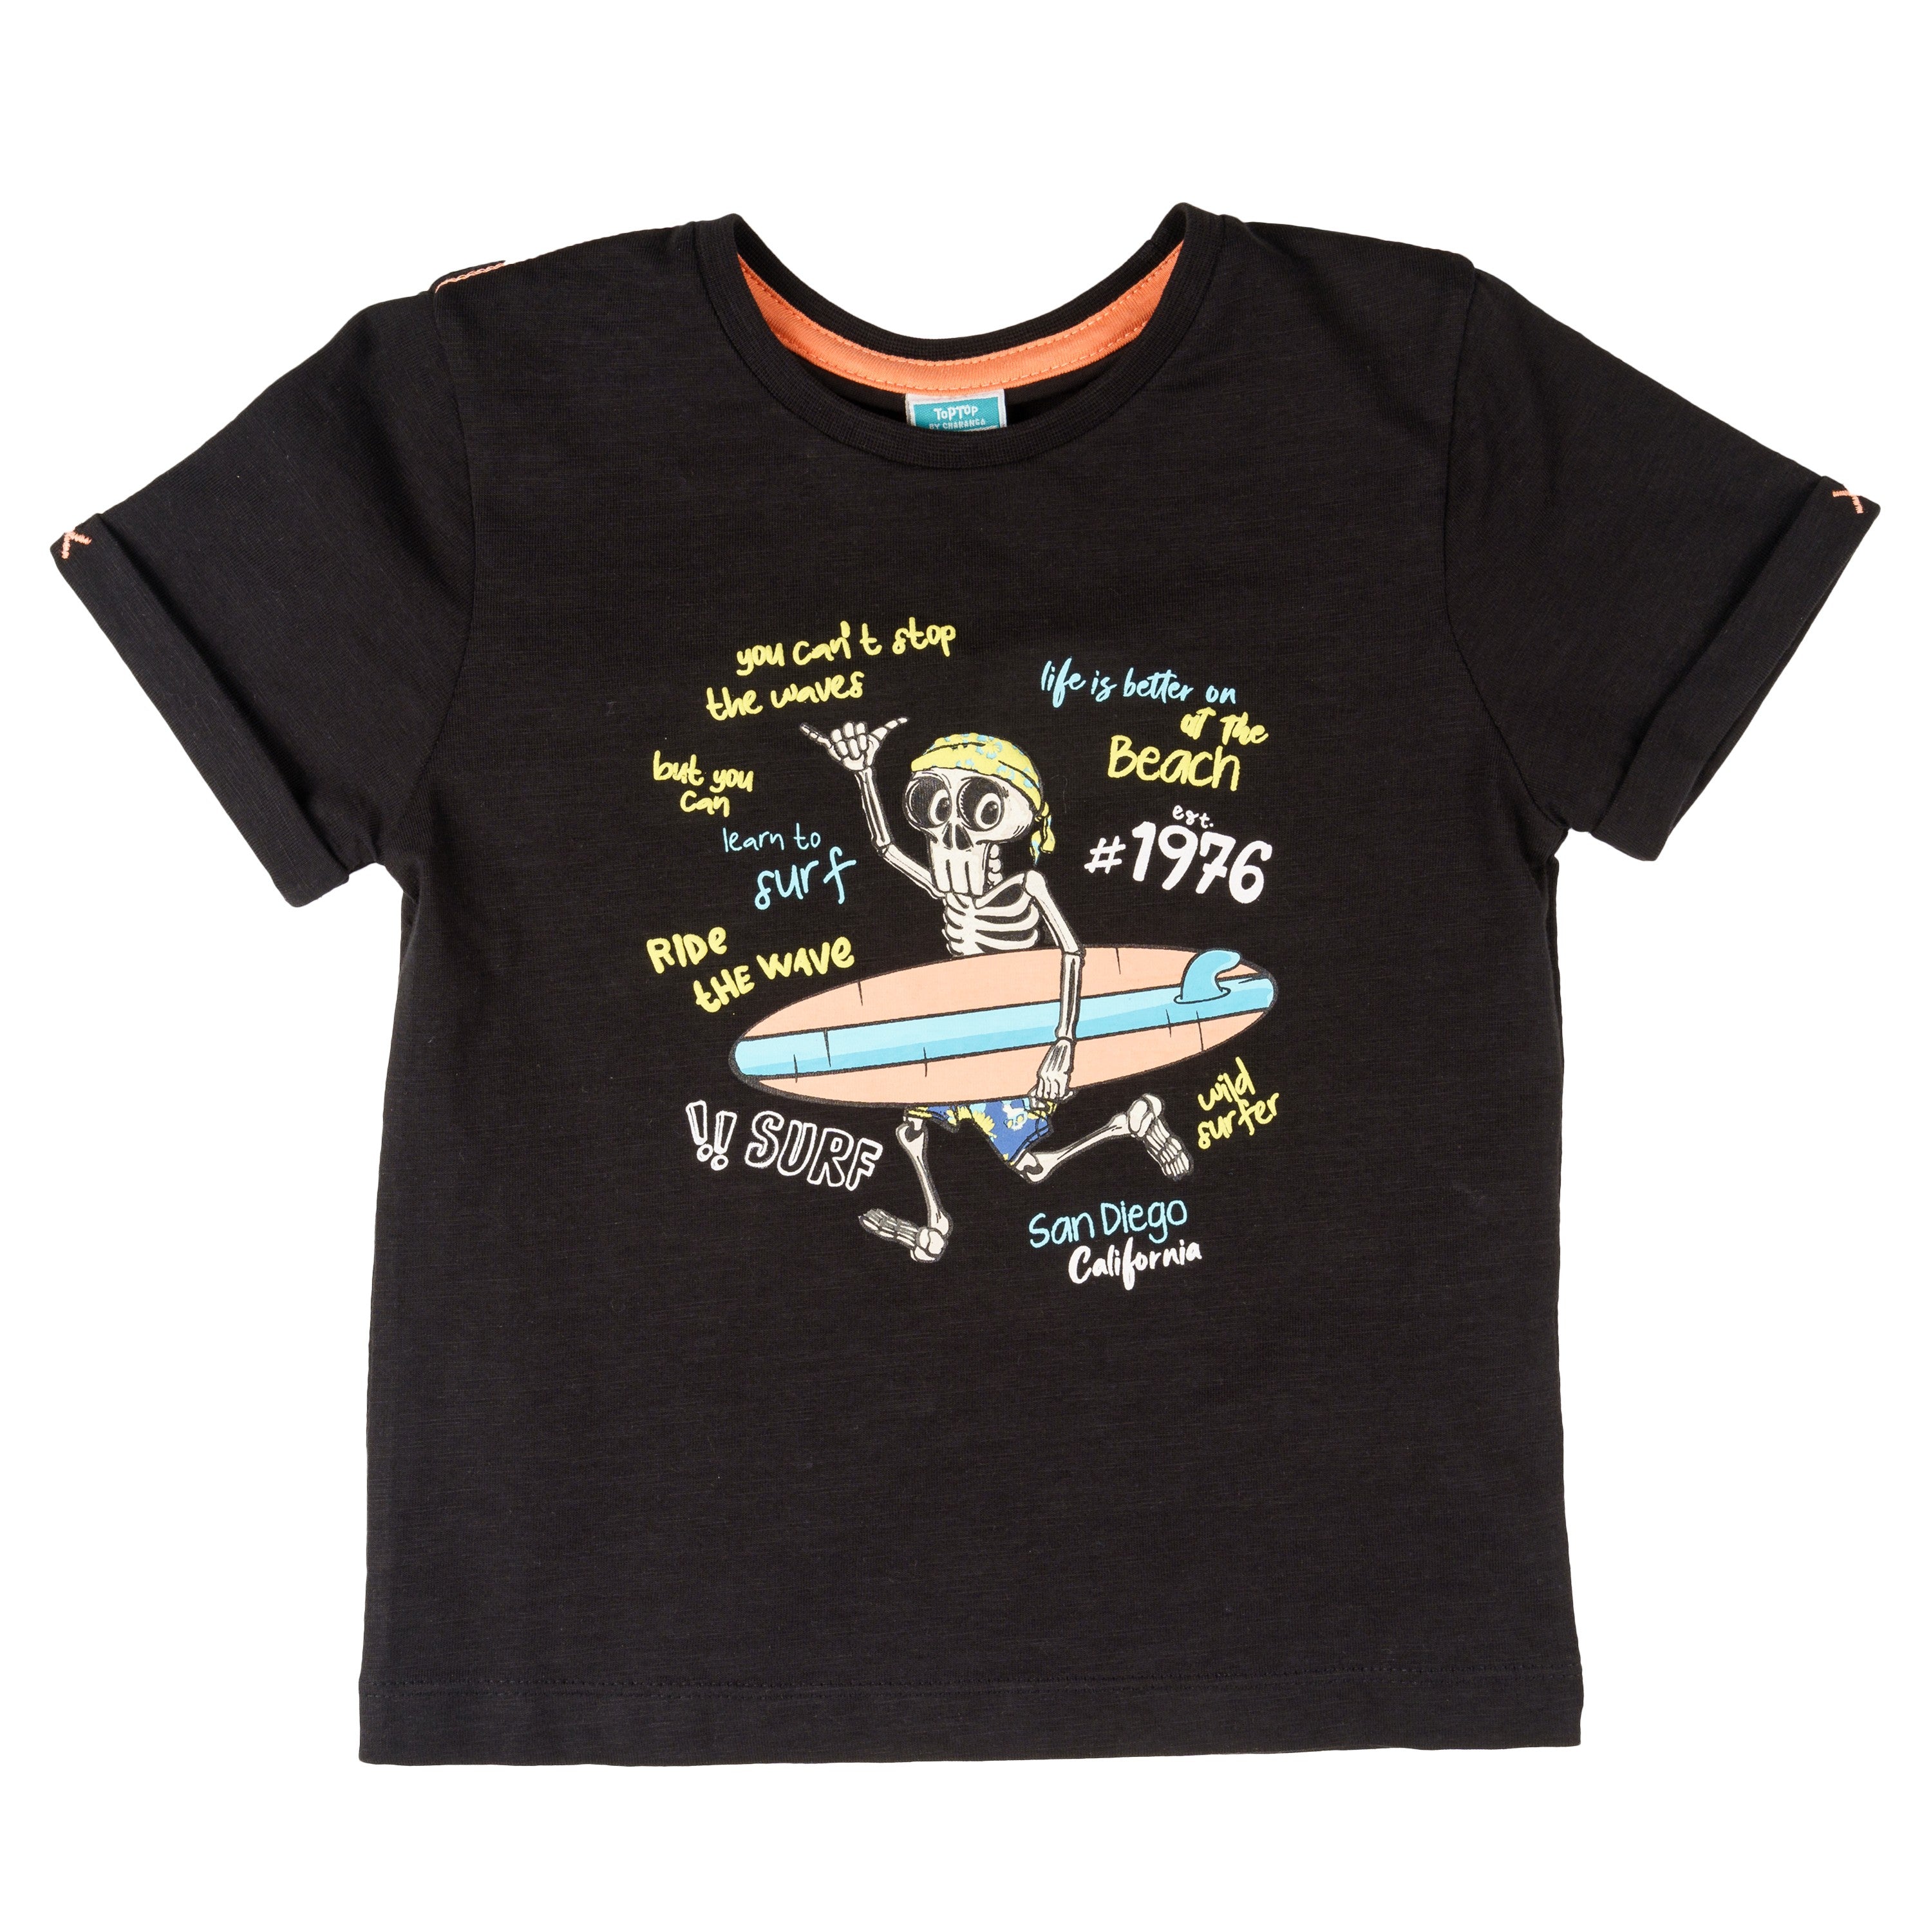 Camiseta de niño color negro VERANO/Outlet